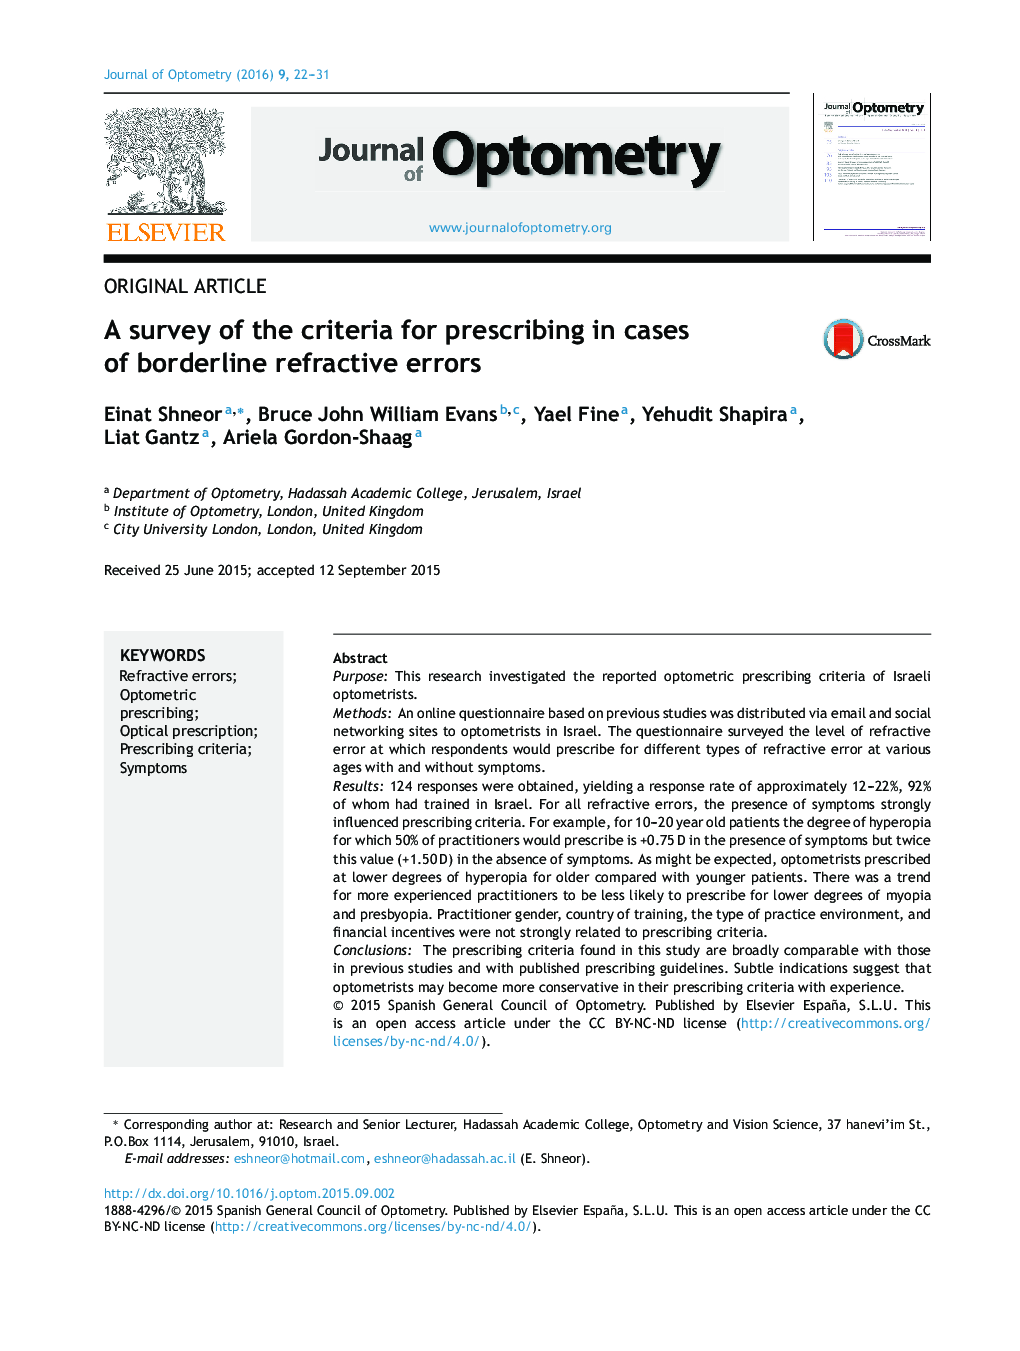 A survey of the criteria for prescribing in cases of borderline refractive errors